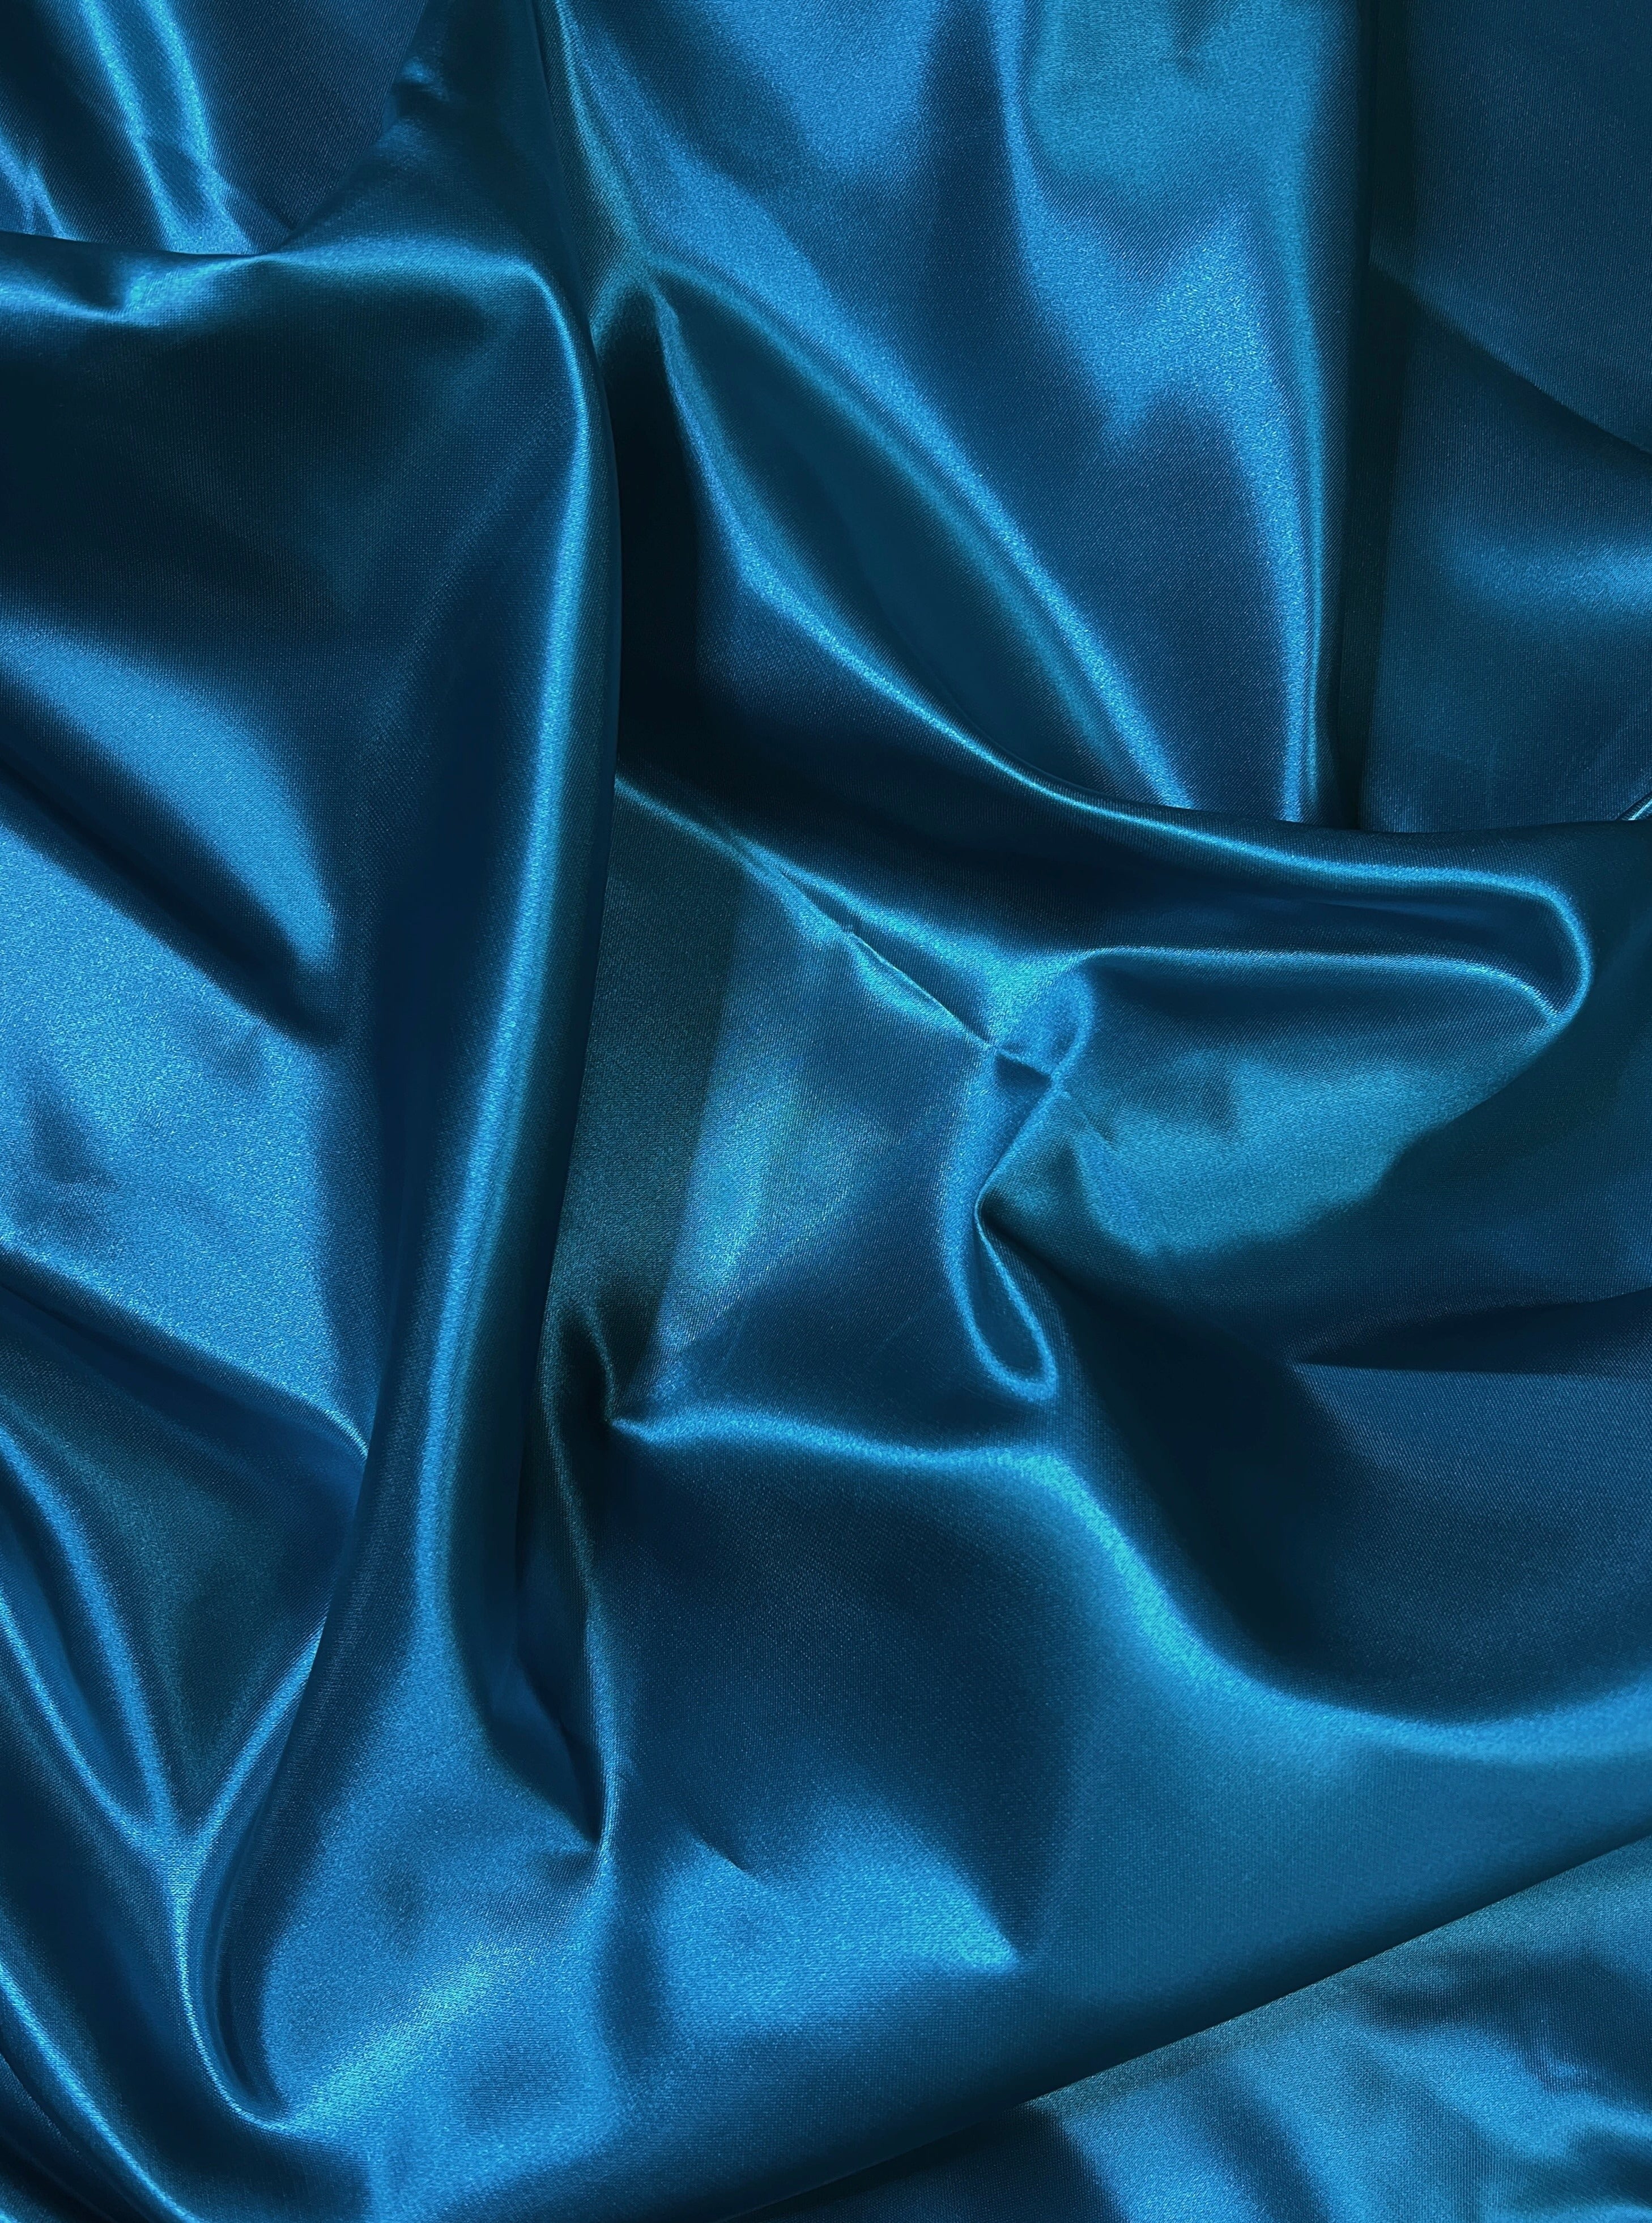 Teal Duchesse Satin Fabric, Blue Bridal Shiny Satin by yard, Dark Blue Heavy Satin Fabric for Wedding Dress, Dark Blue Satin Fabric, premium satin, best quality satin, satin usa, satin los angelos, kikitextile, kiki fabrics, satin for woman